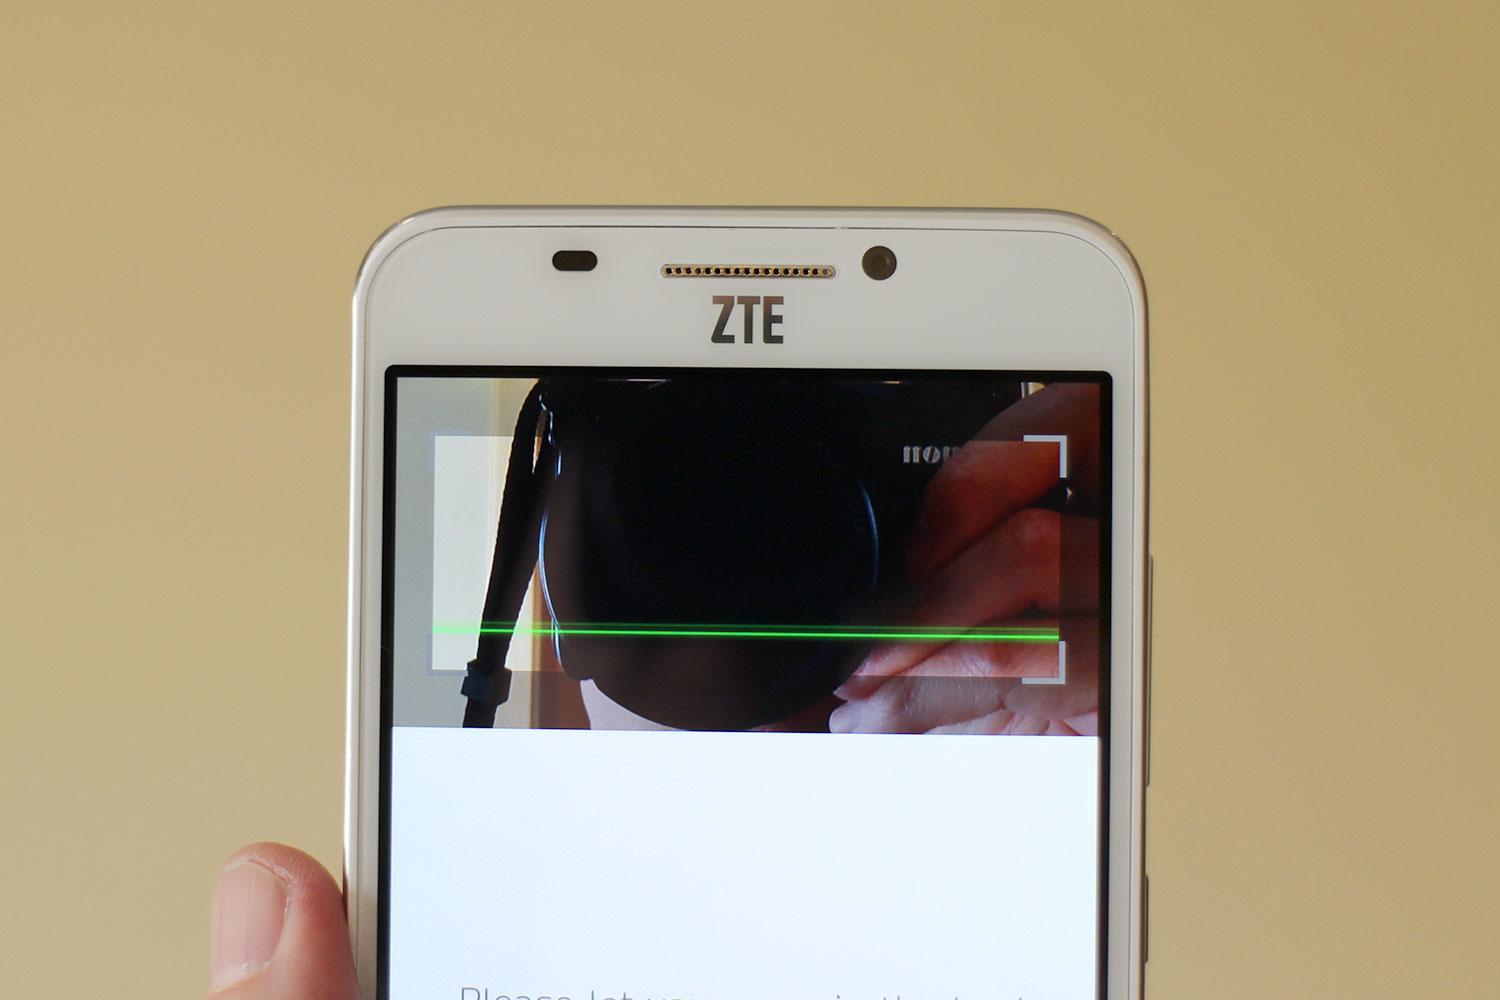 how retinal scanning works in ztes grand s3 zte screen top